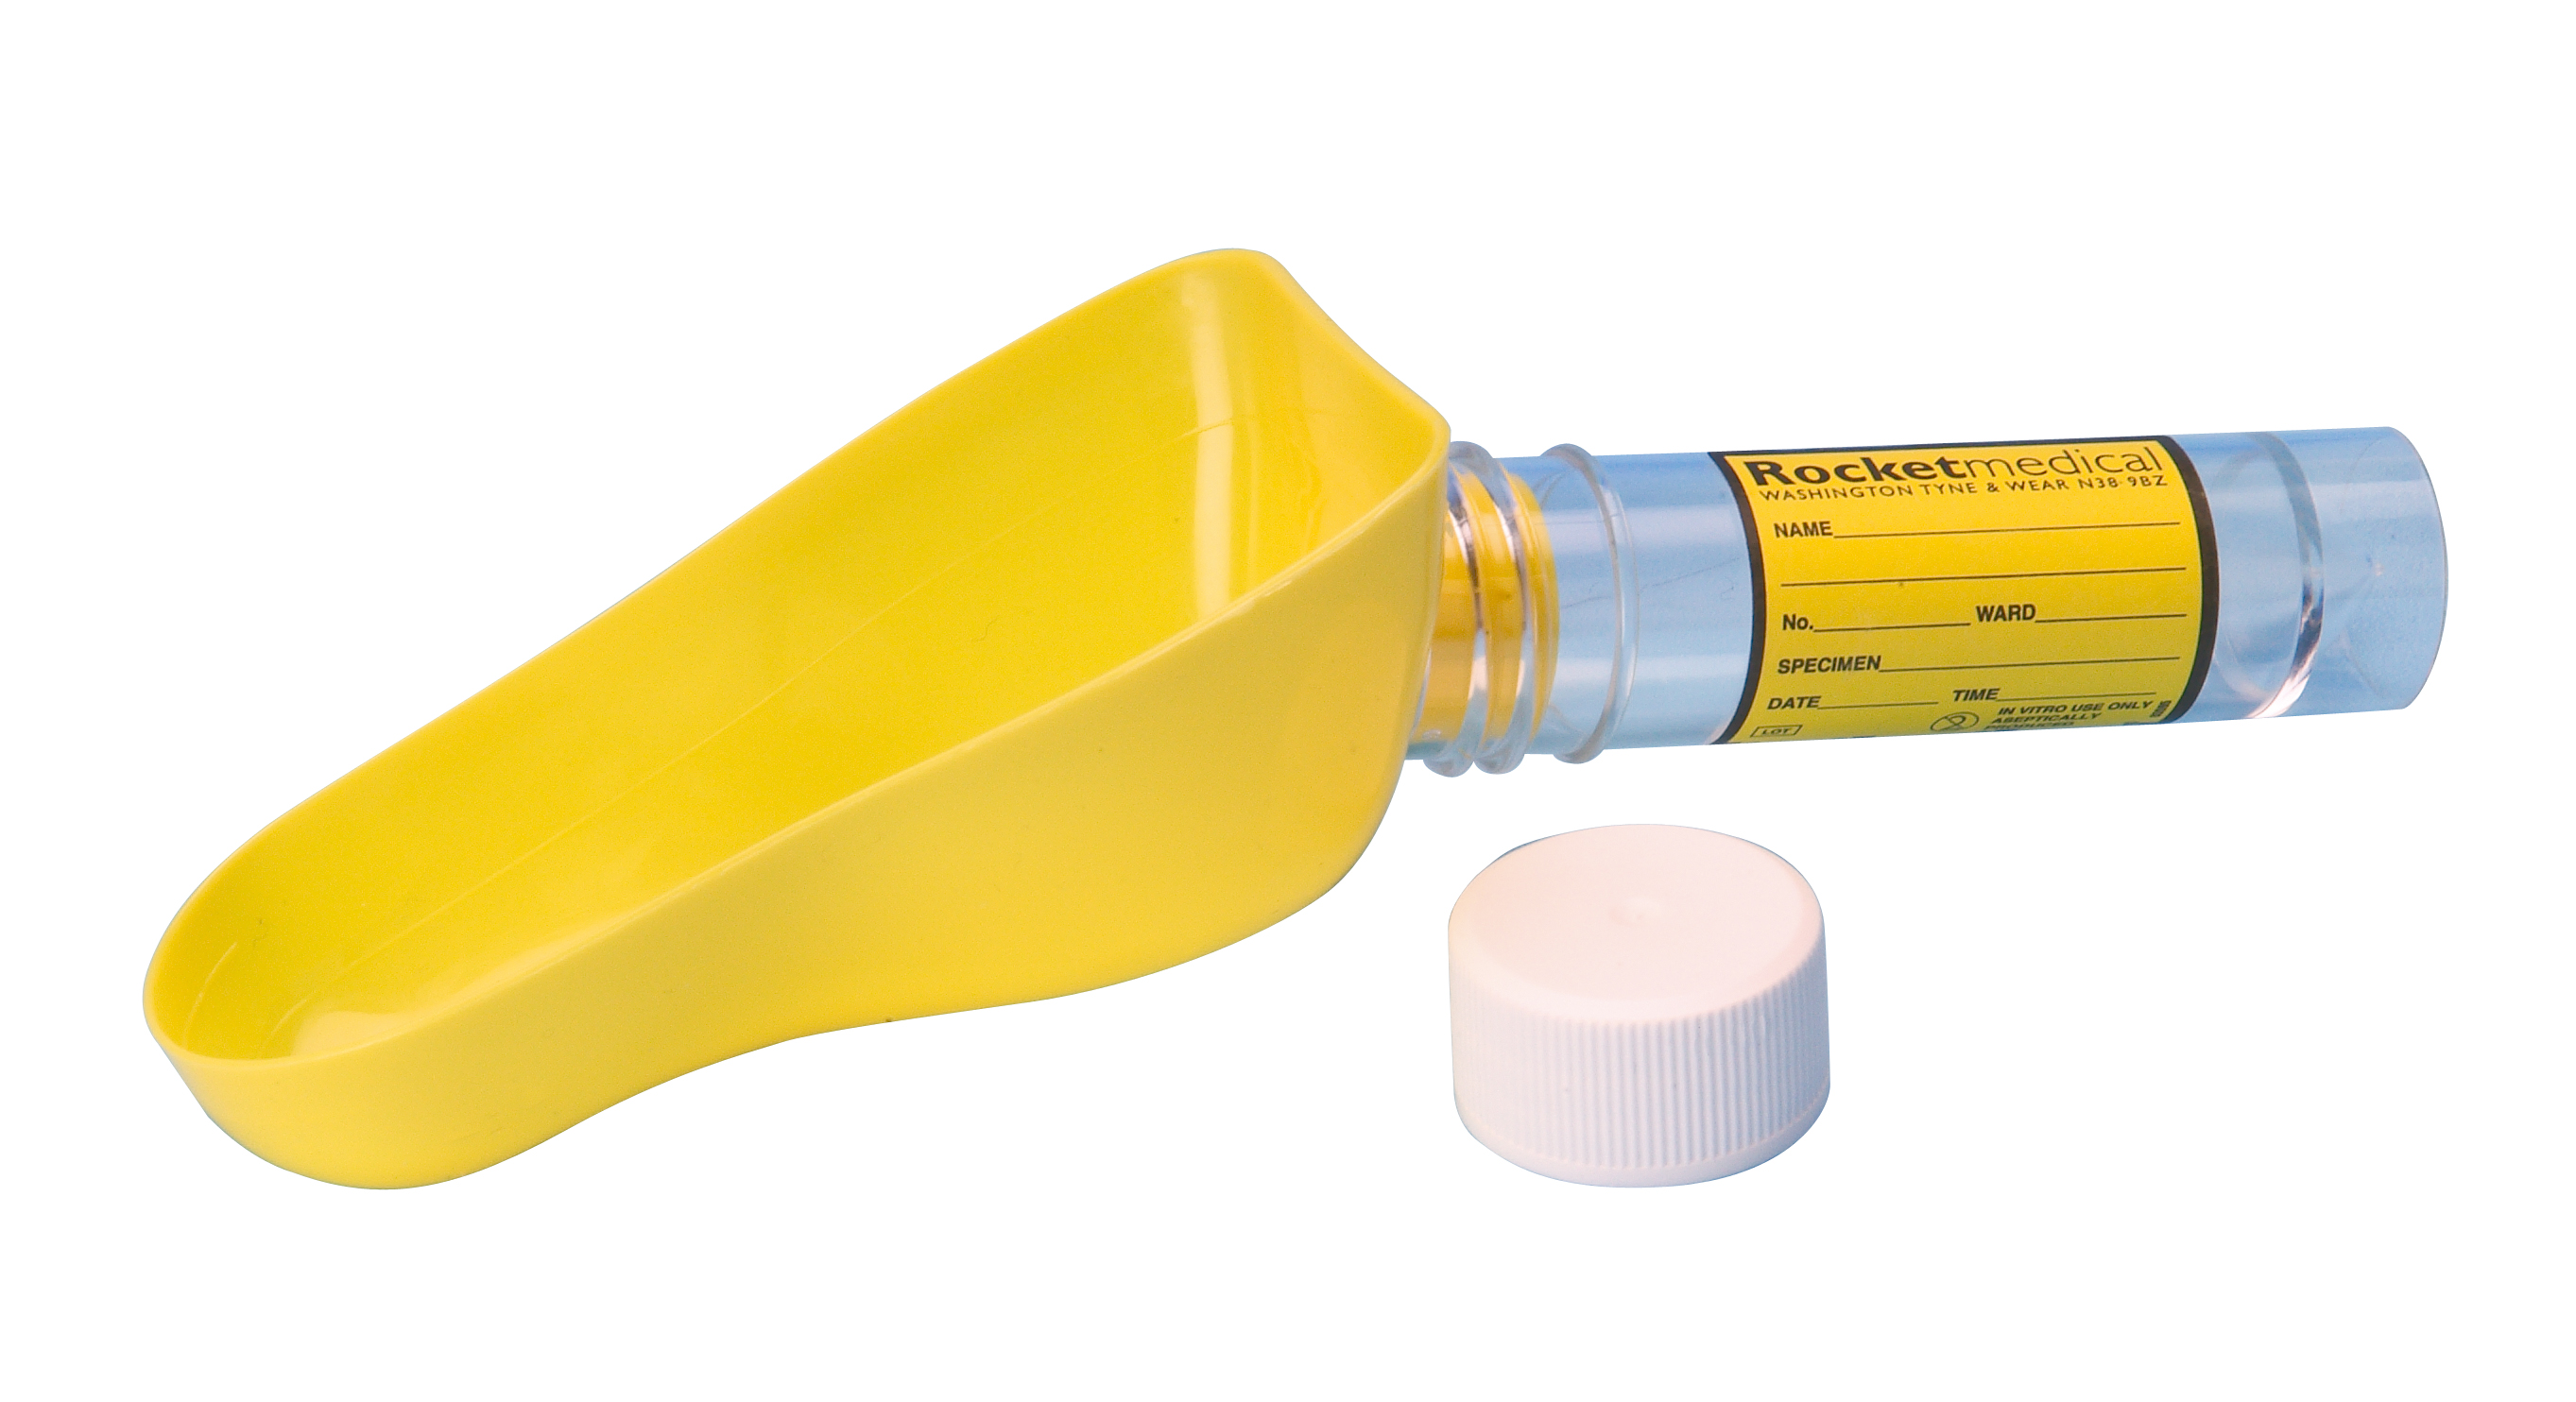 Uripet - urine sample collection